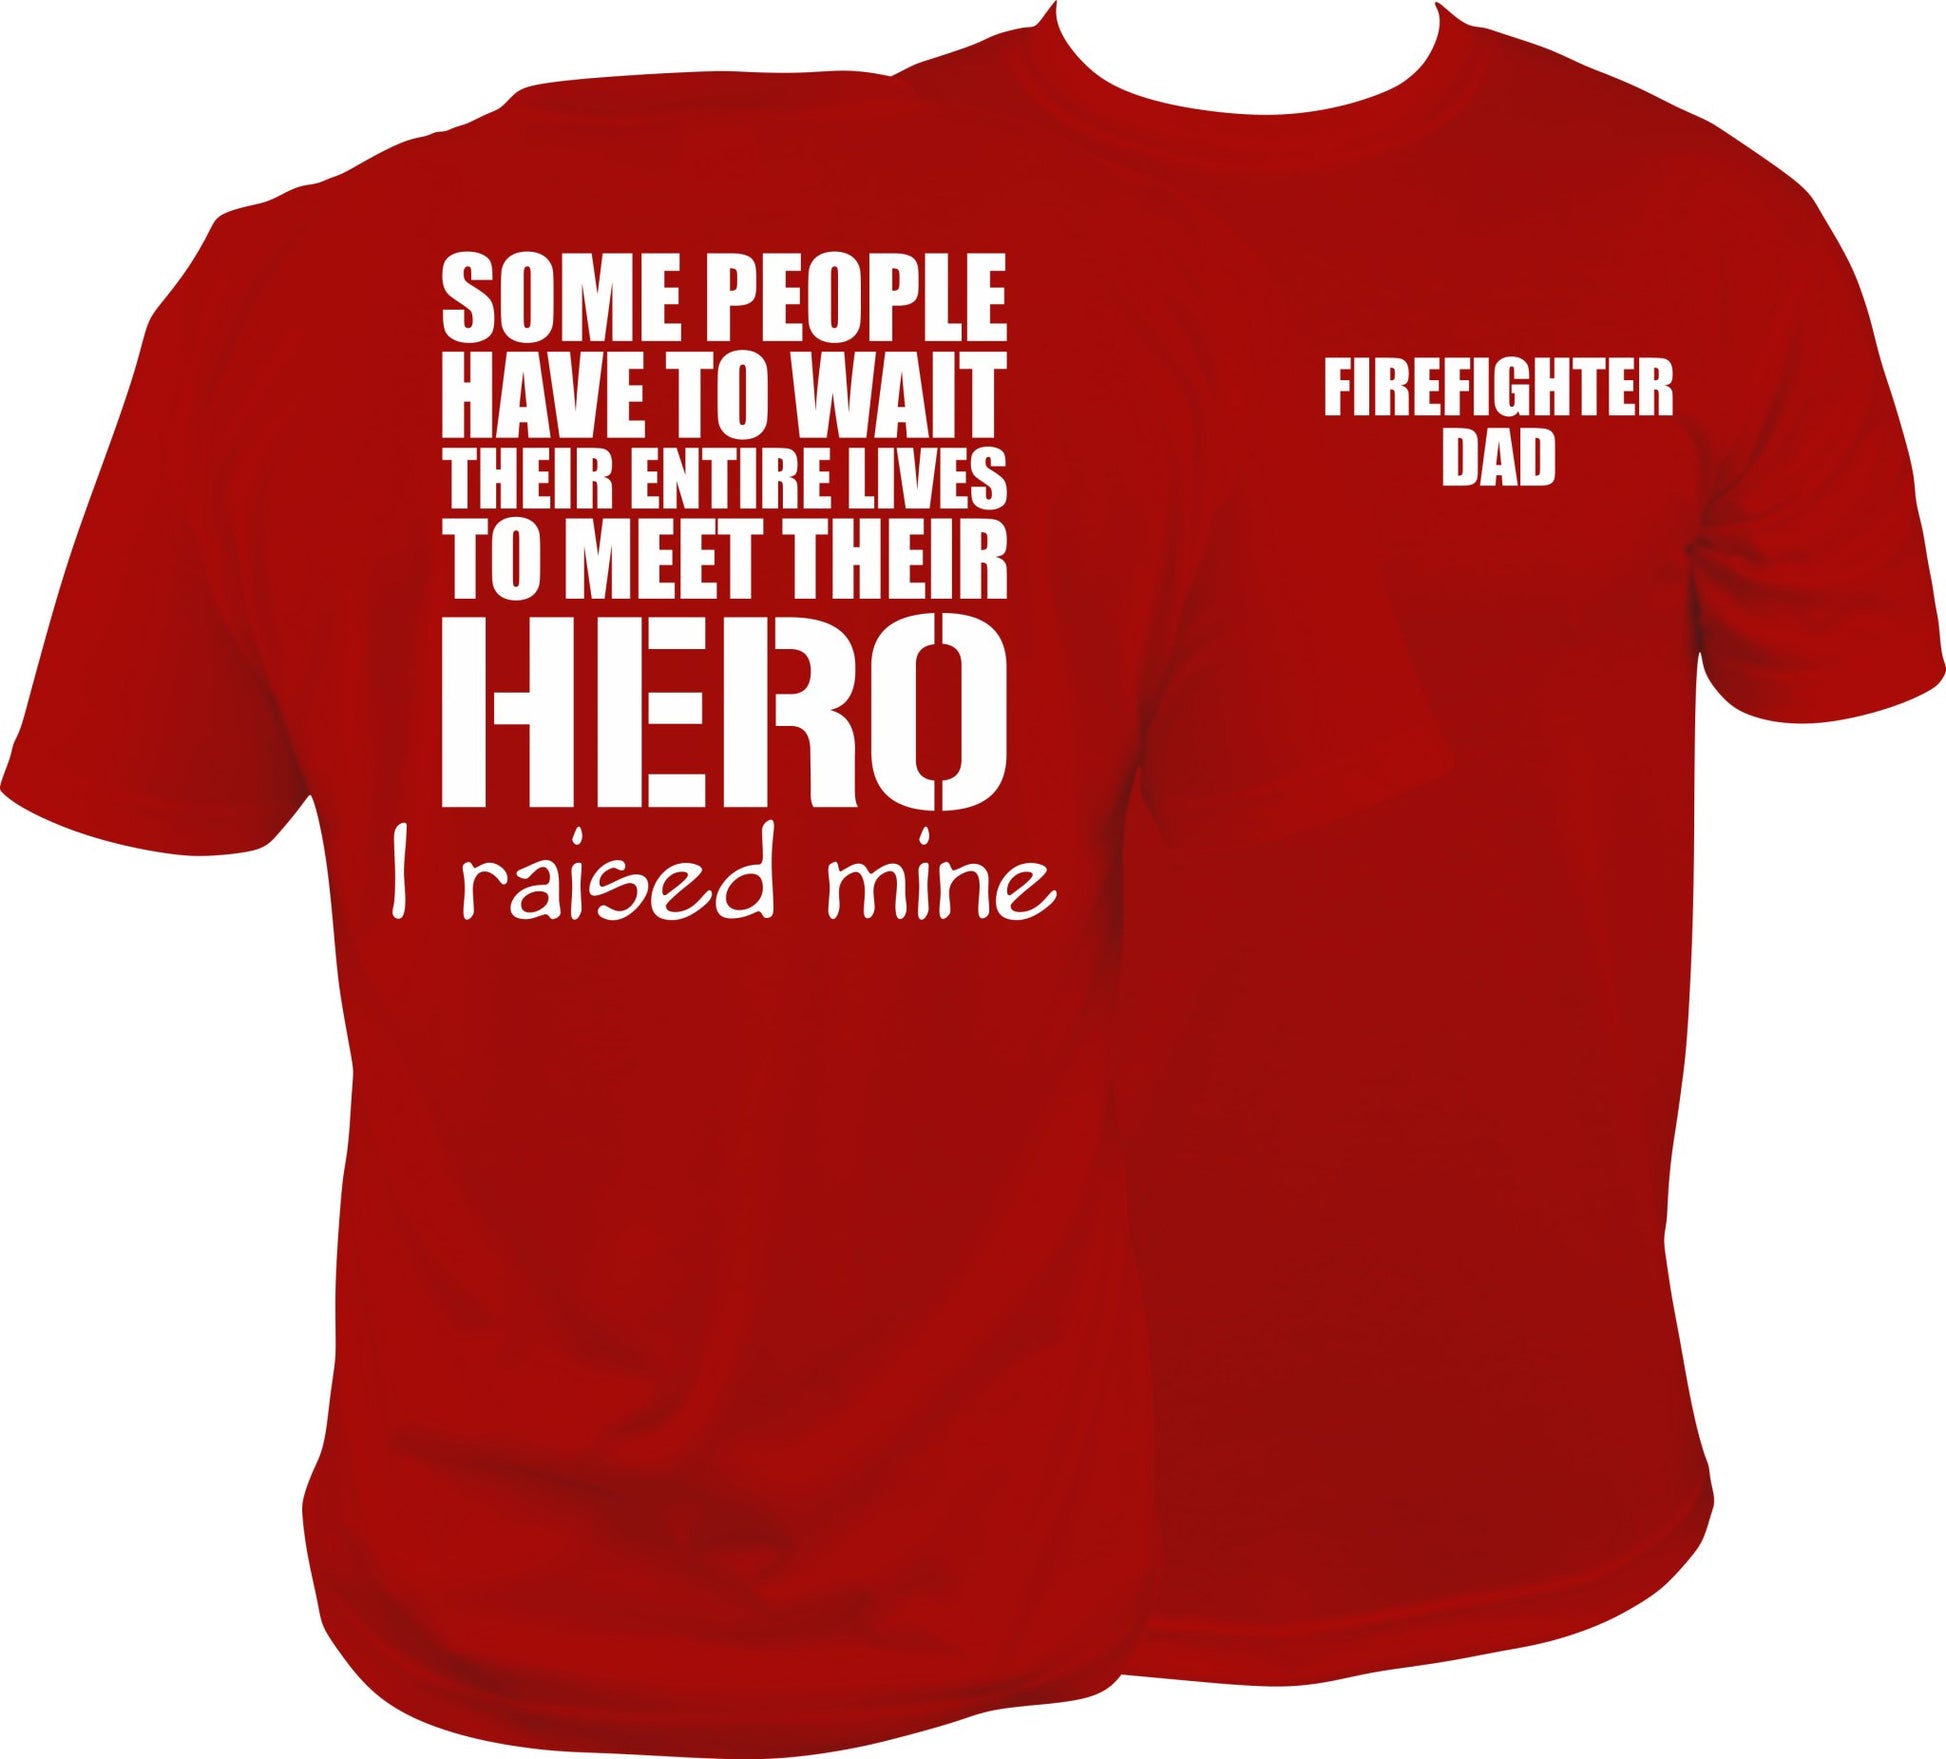 Firefighter Dad shirt, I raised a hero - SBS T Shop